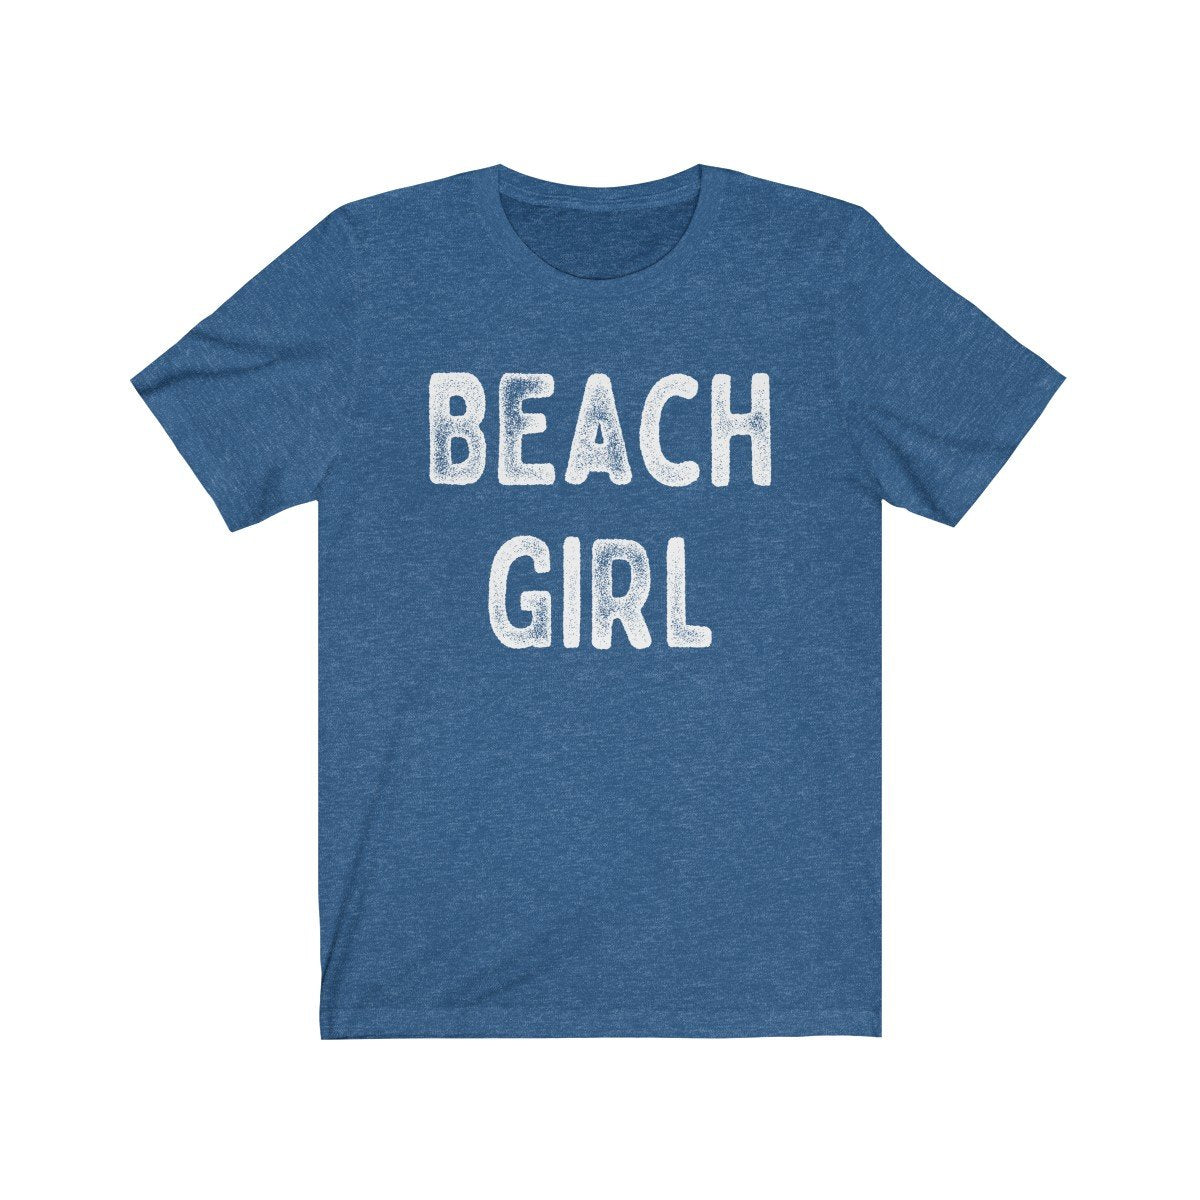 Beach Girl White Text Unisex Short Sleeve T-Shirt - Captain Woody's Beach Club